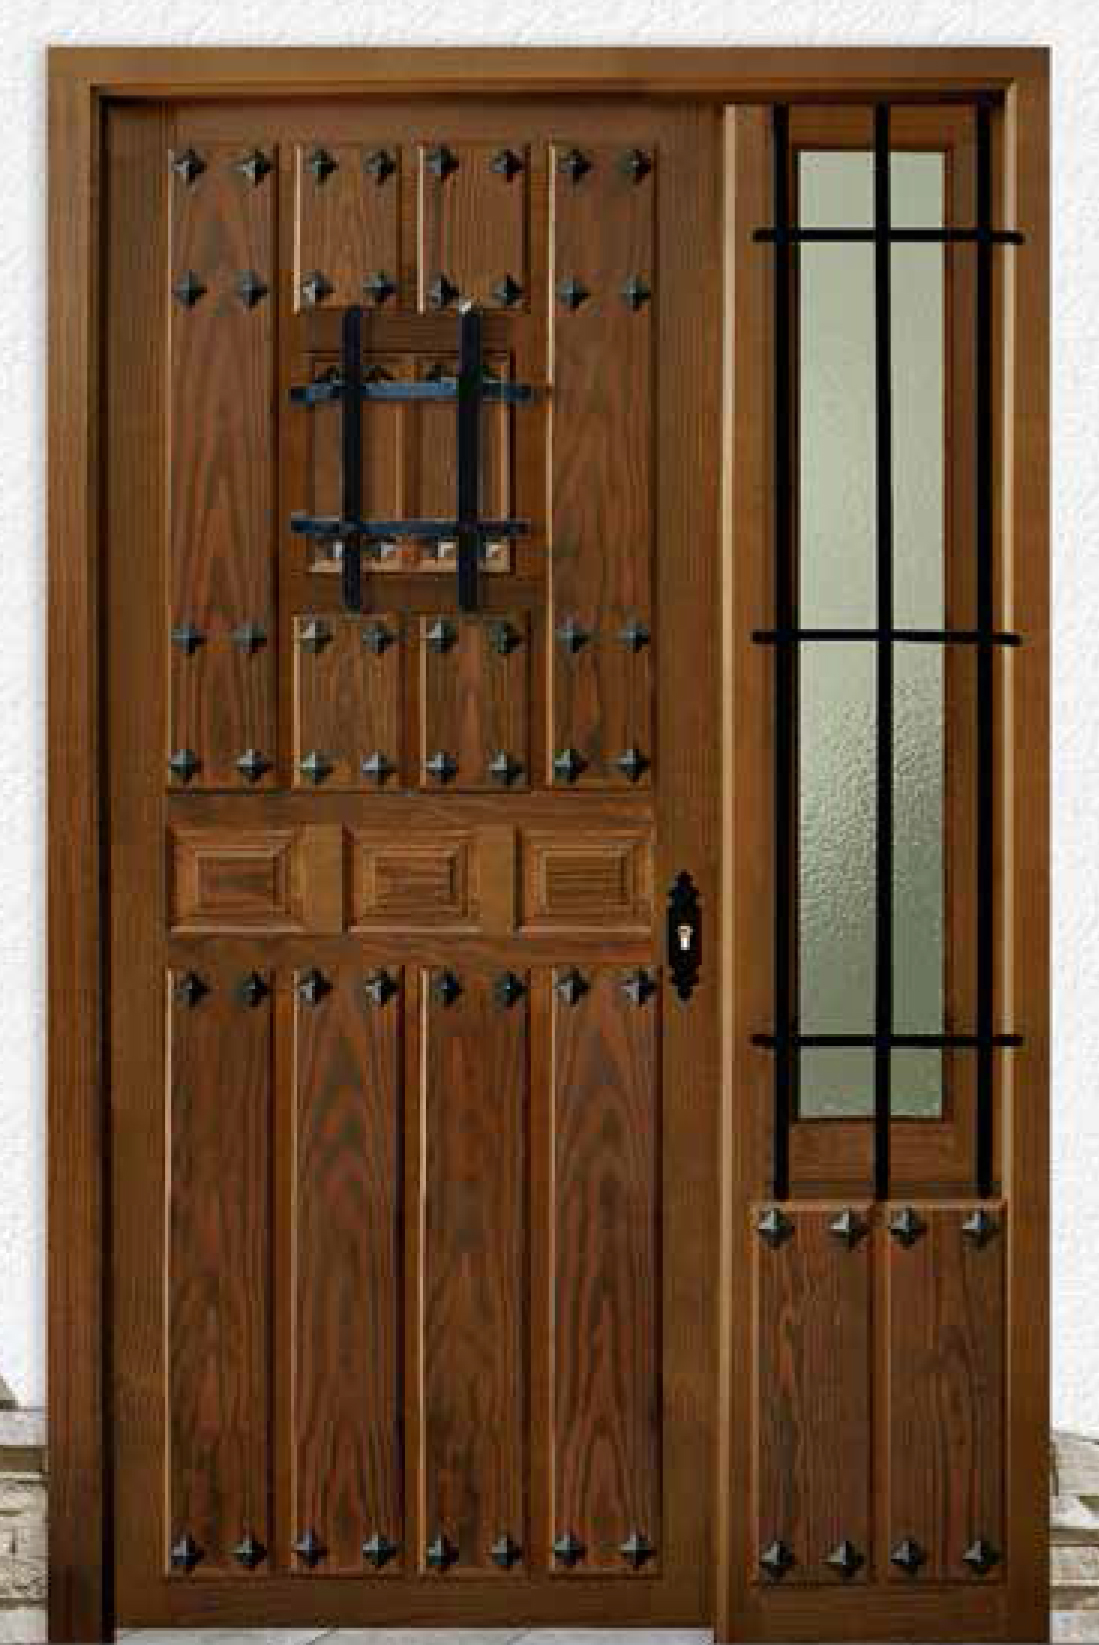 https://www.puertaselcerro.com/sites/puertaselcerro.com/files/img/productos/puerta-exterior-madera-mod-r-100_0.jpg